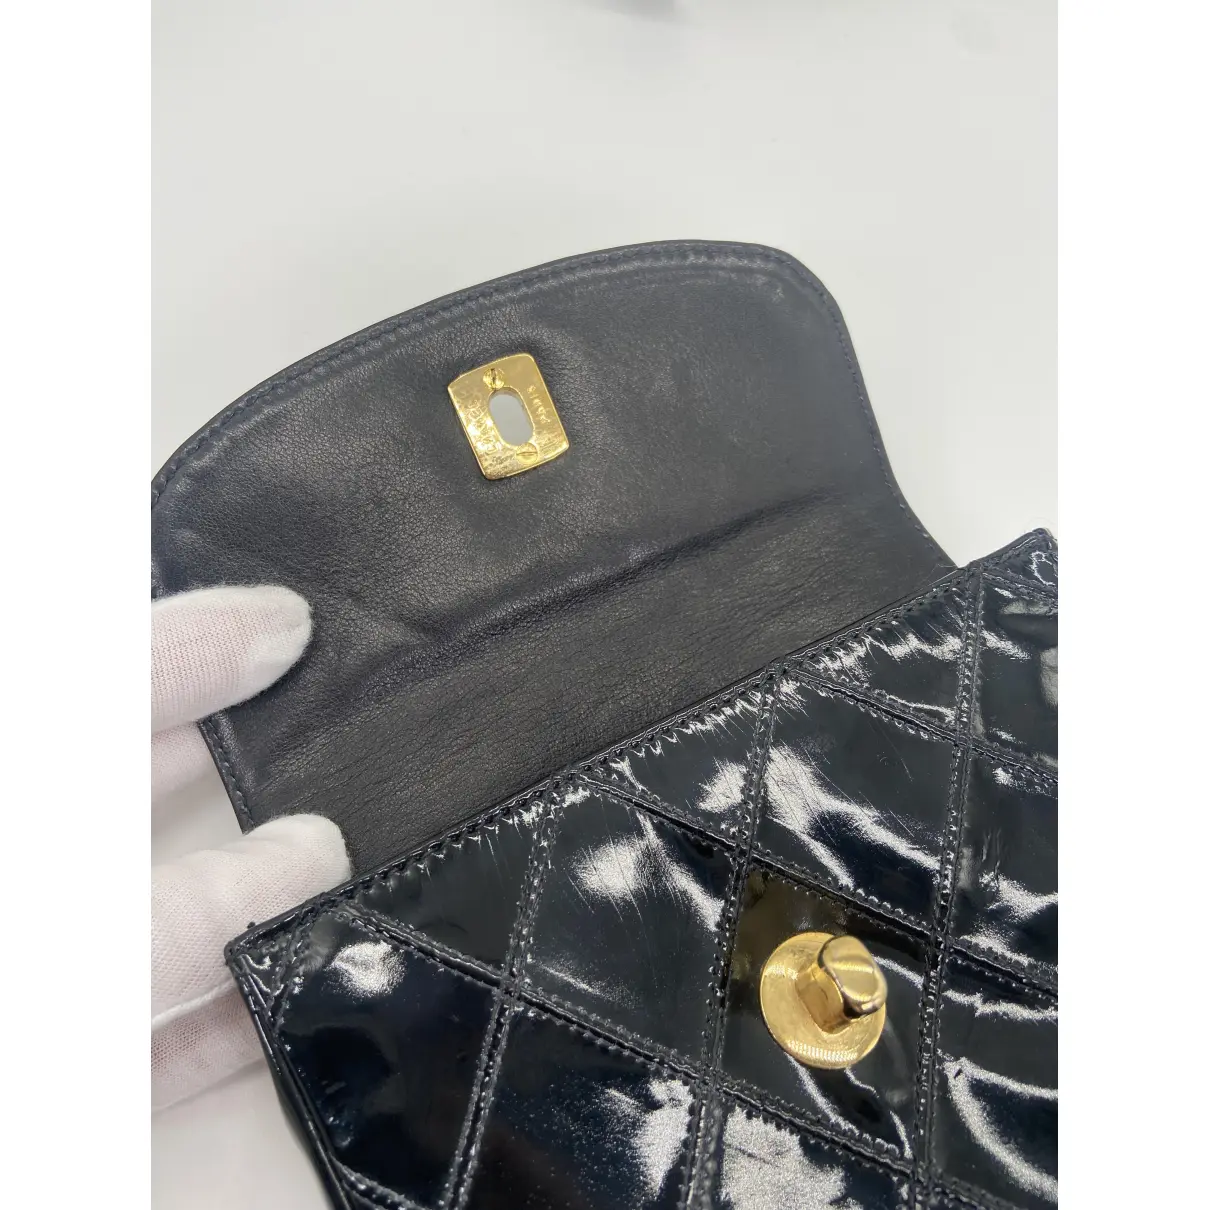 Patent leather mini bag Chanel